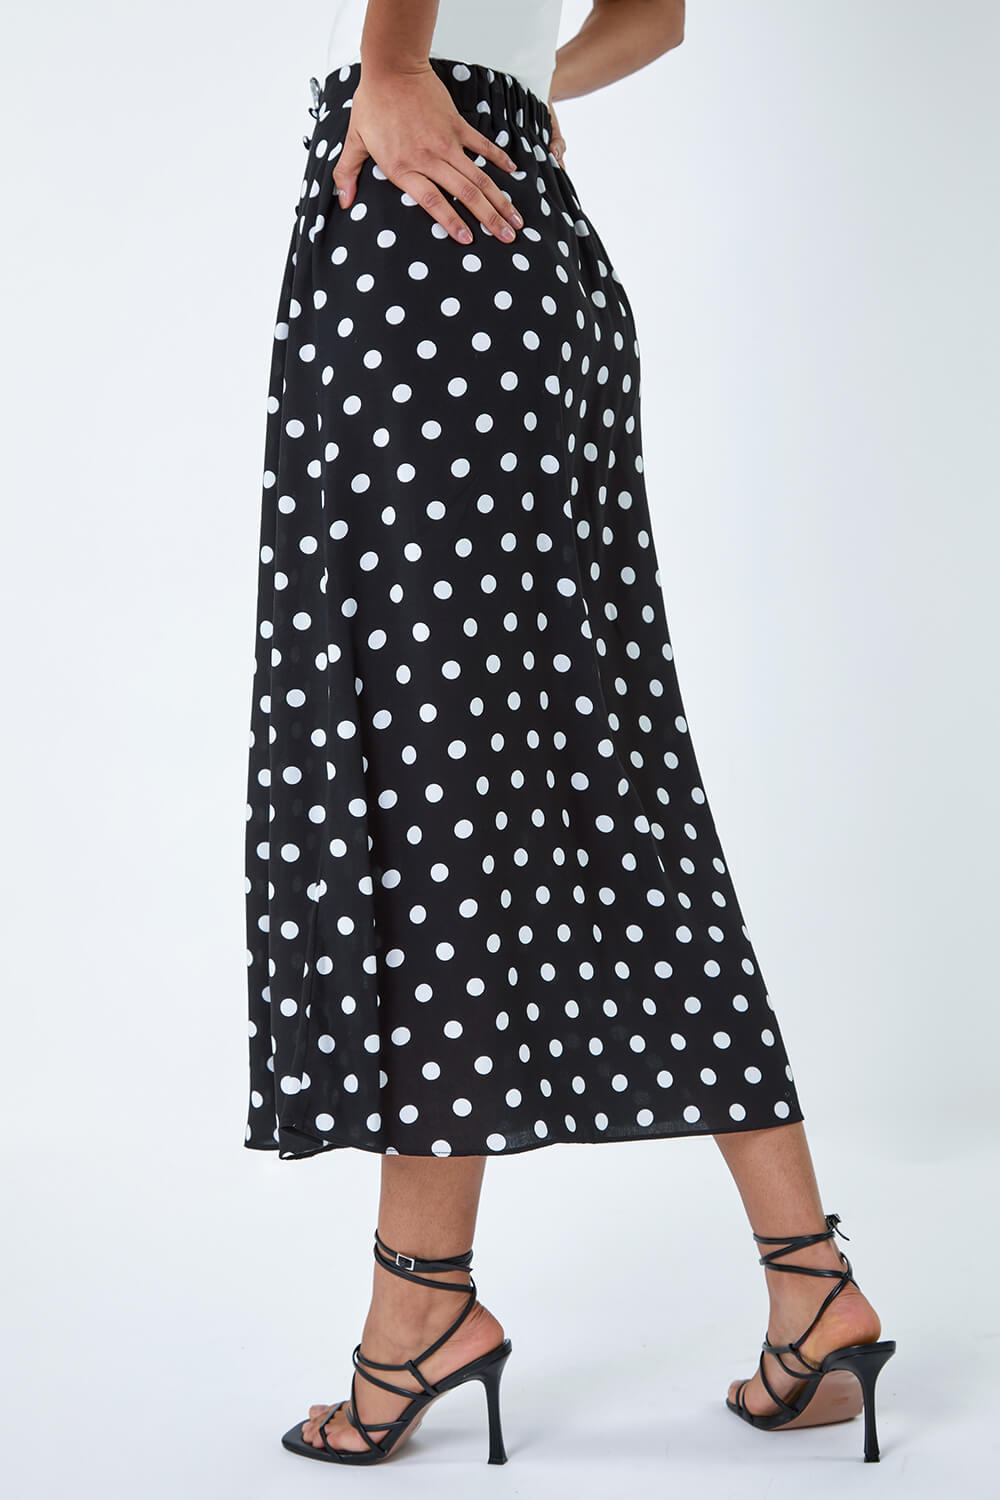 Black Polka Dot Button Detail Midi Skirt, Image 3 of 5